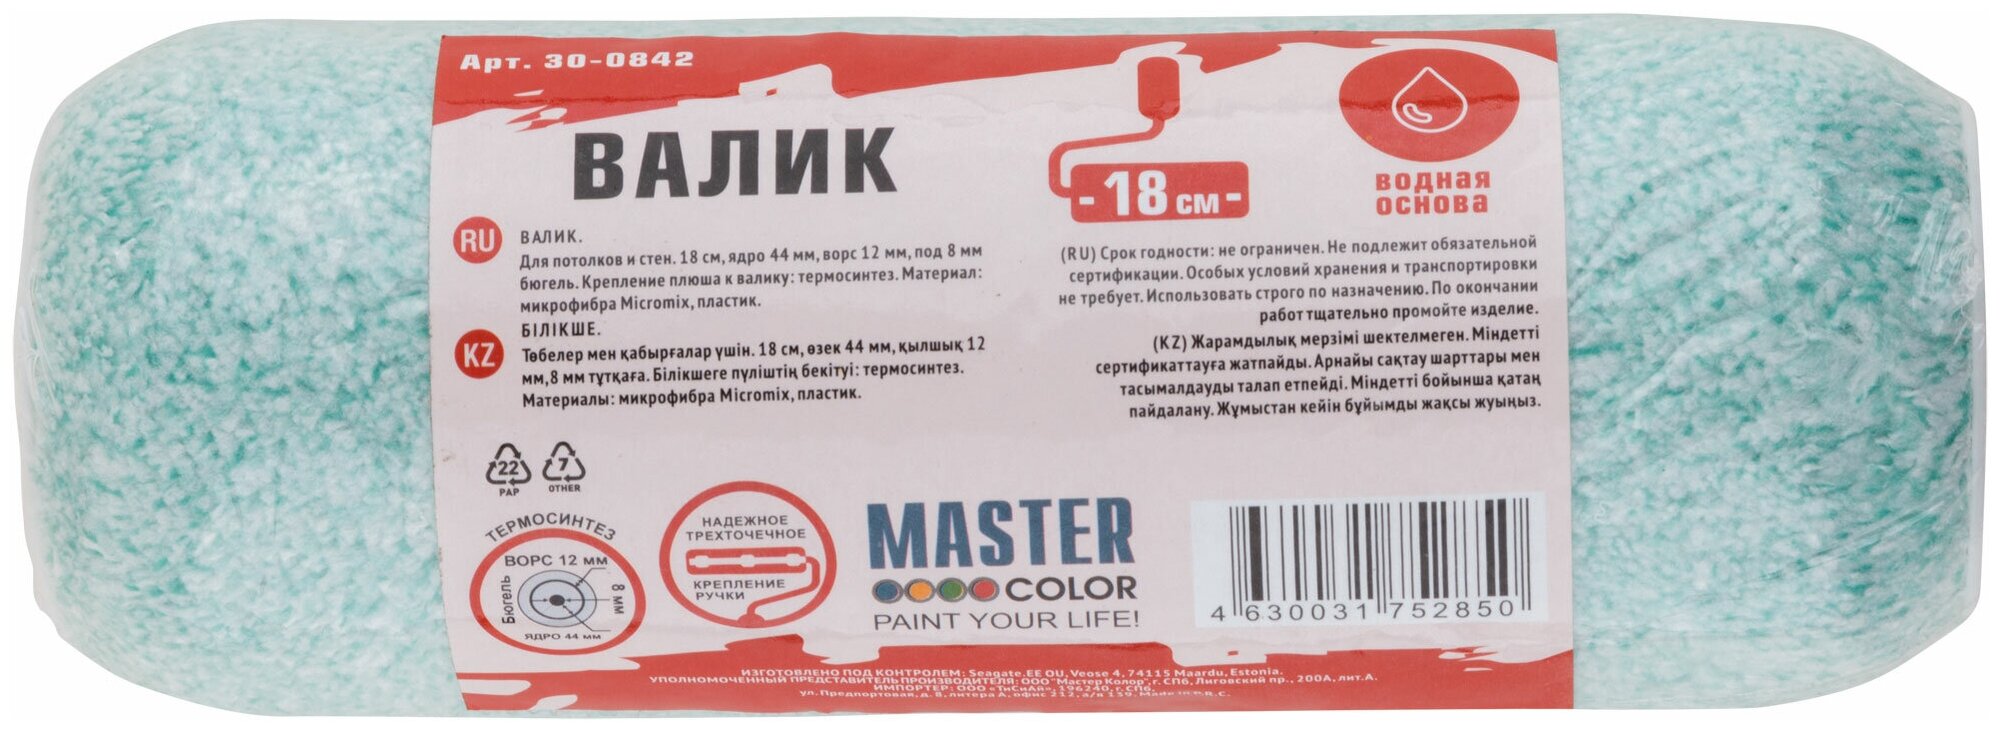 Валик Master Color , ядро 44 мм, микрофибра "Micromix", ворс 12 мм, под 8 мм ручку, 180 мм - фото №3